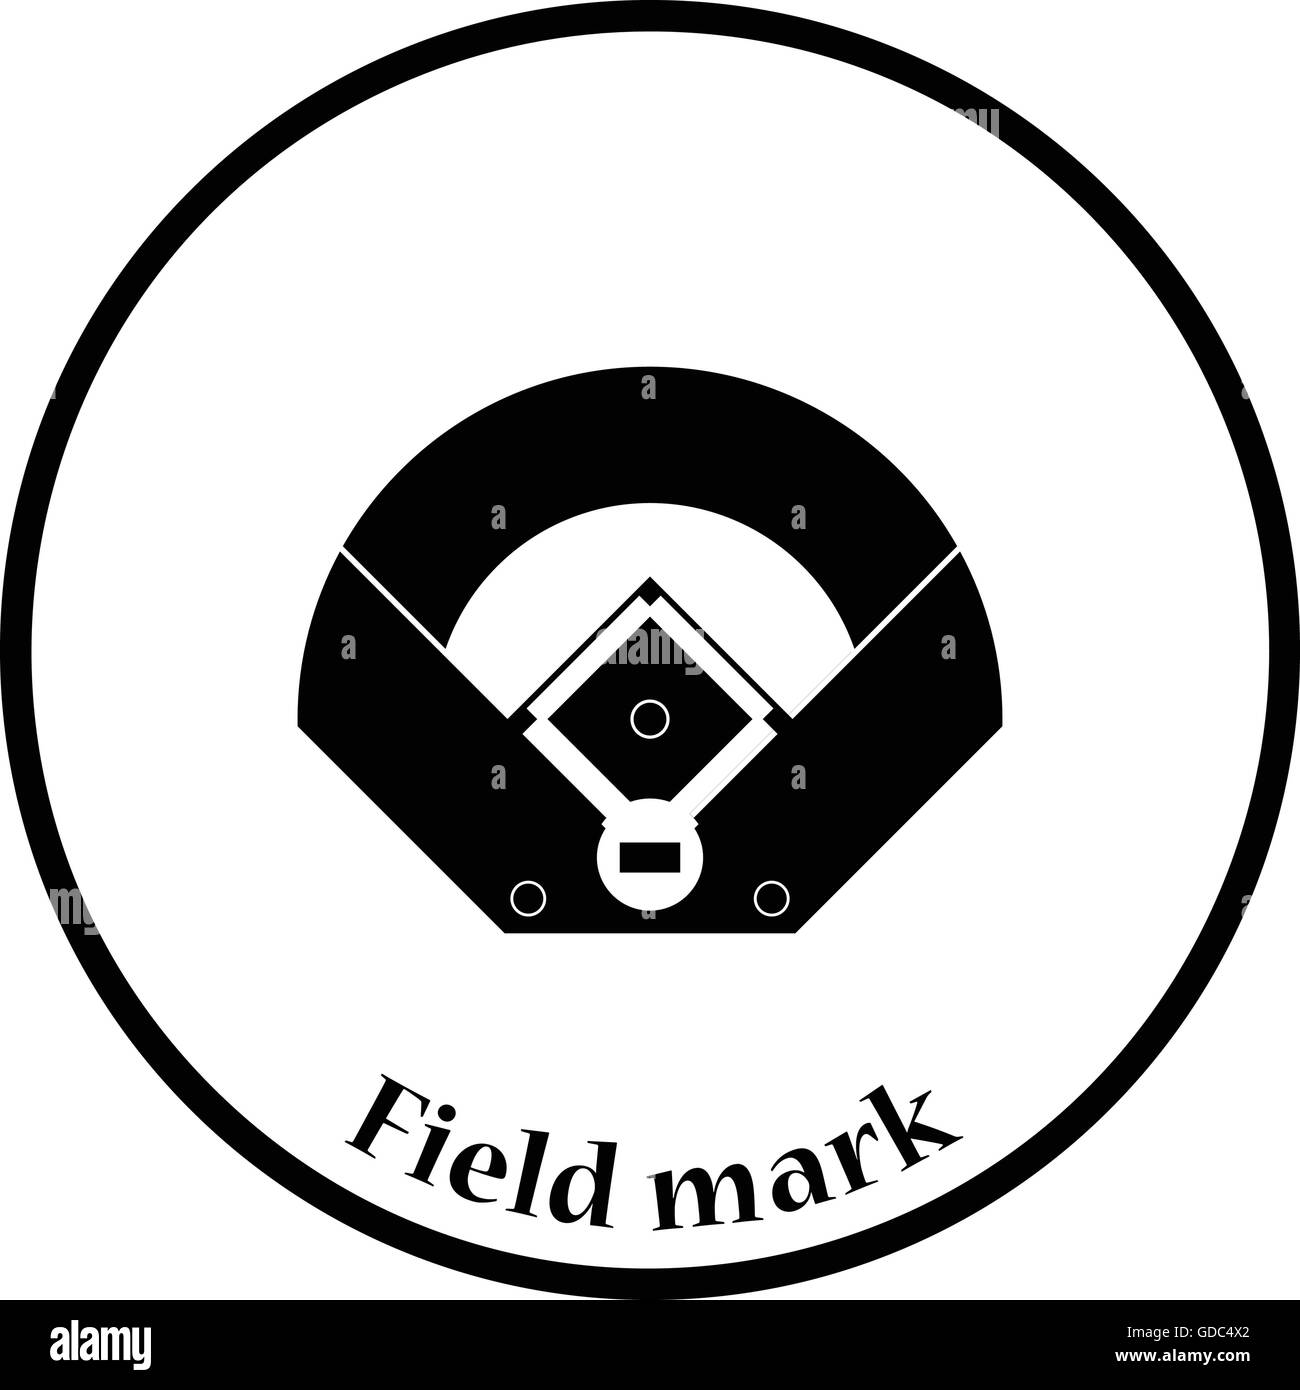 Baseball field aerial view icon. Thin circle design. Vector illustration. Stock Vector